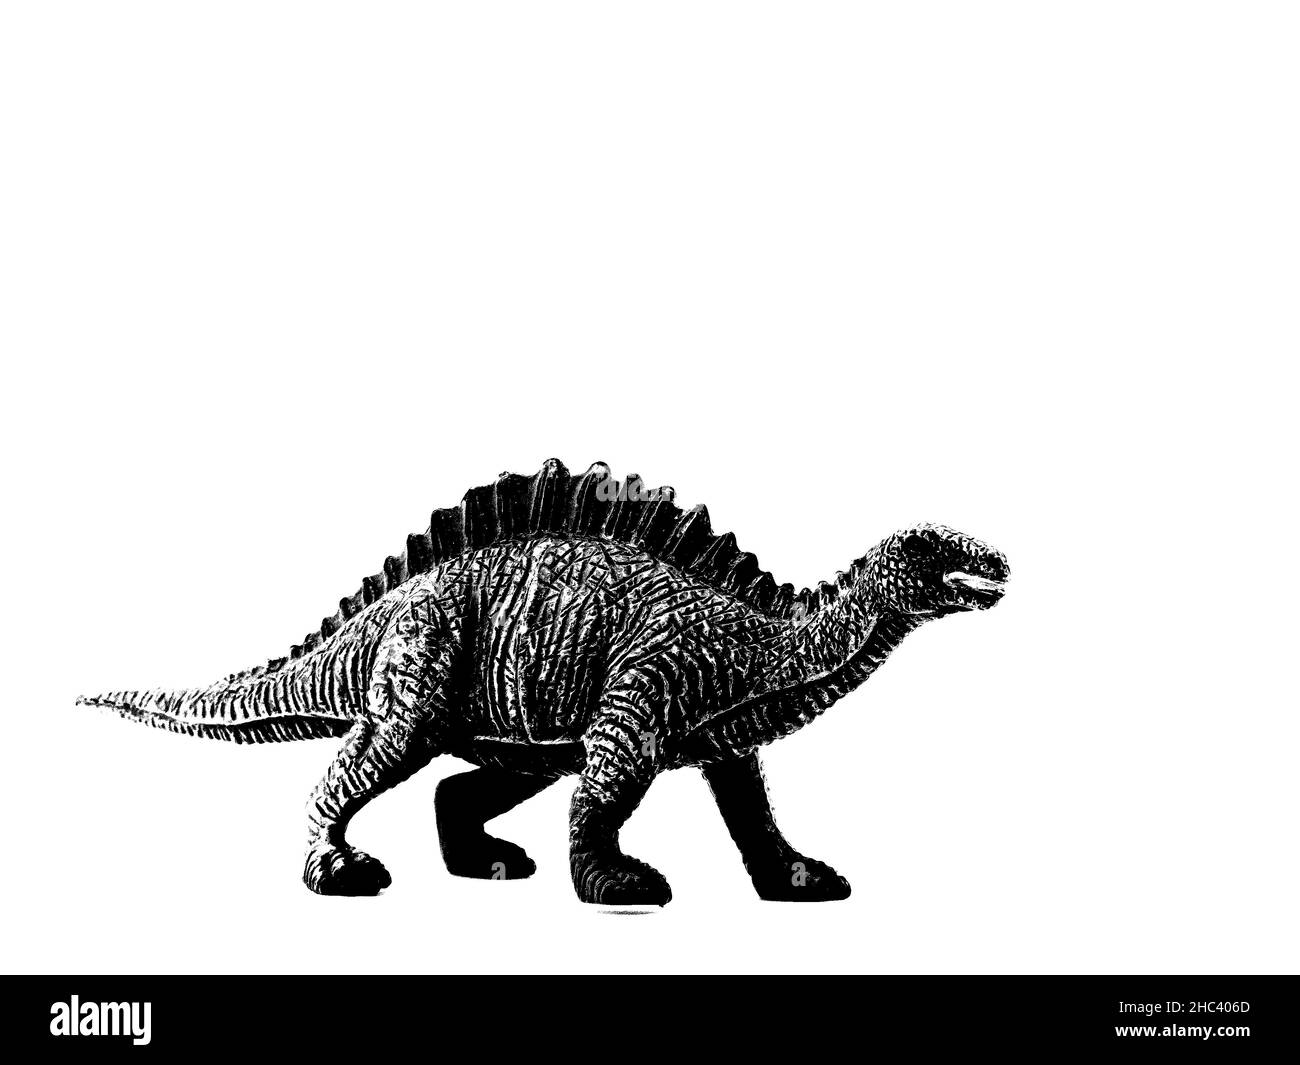 stylized image of a toy dinosaur Stock Photo